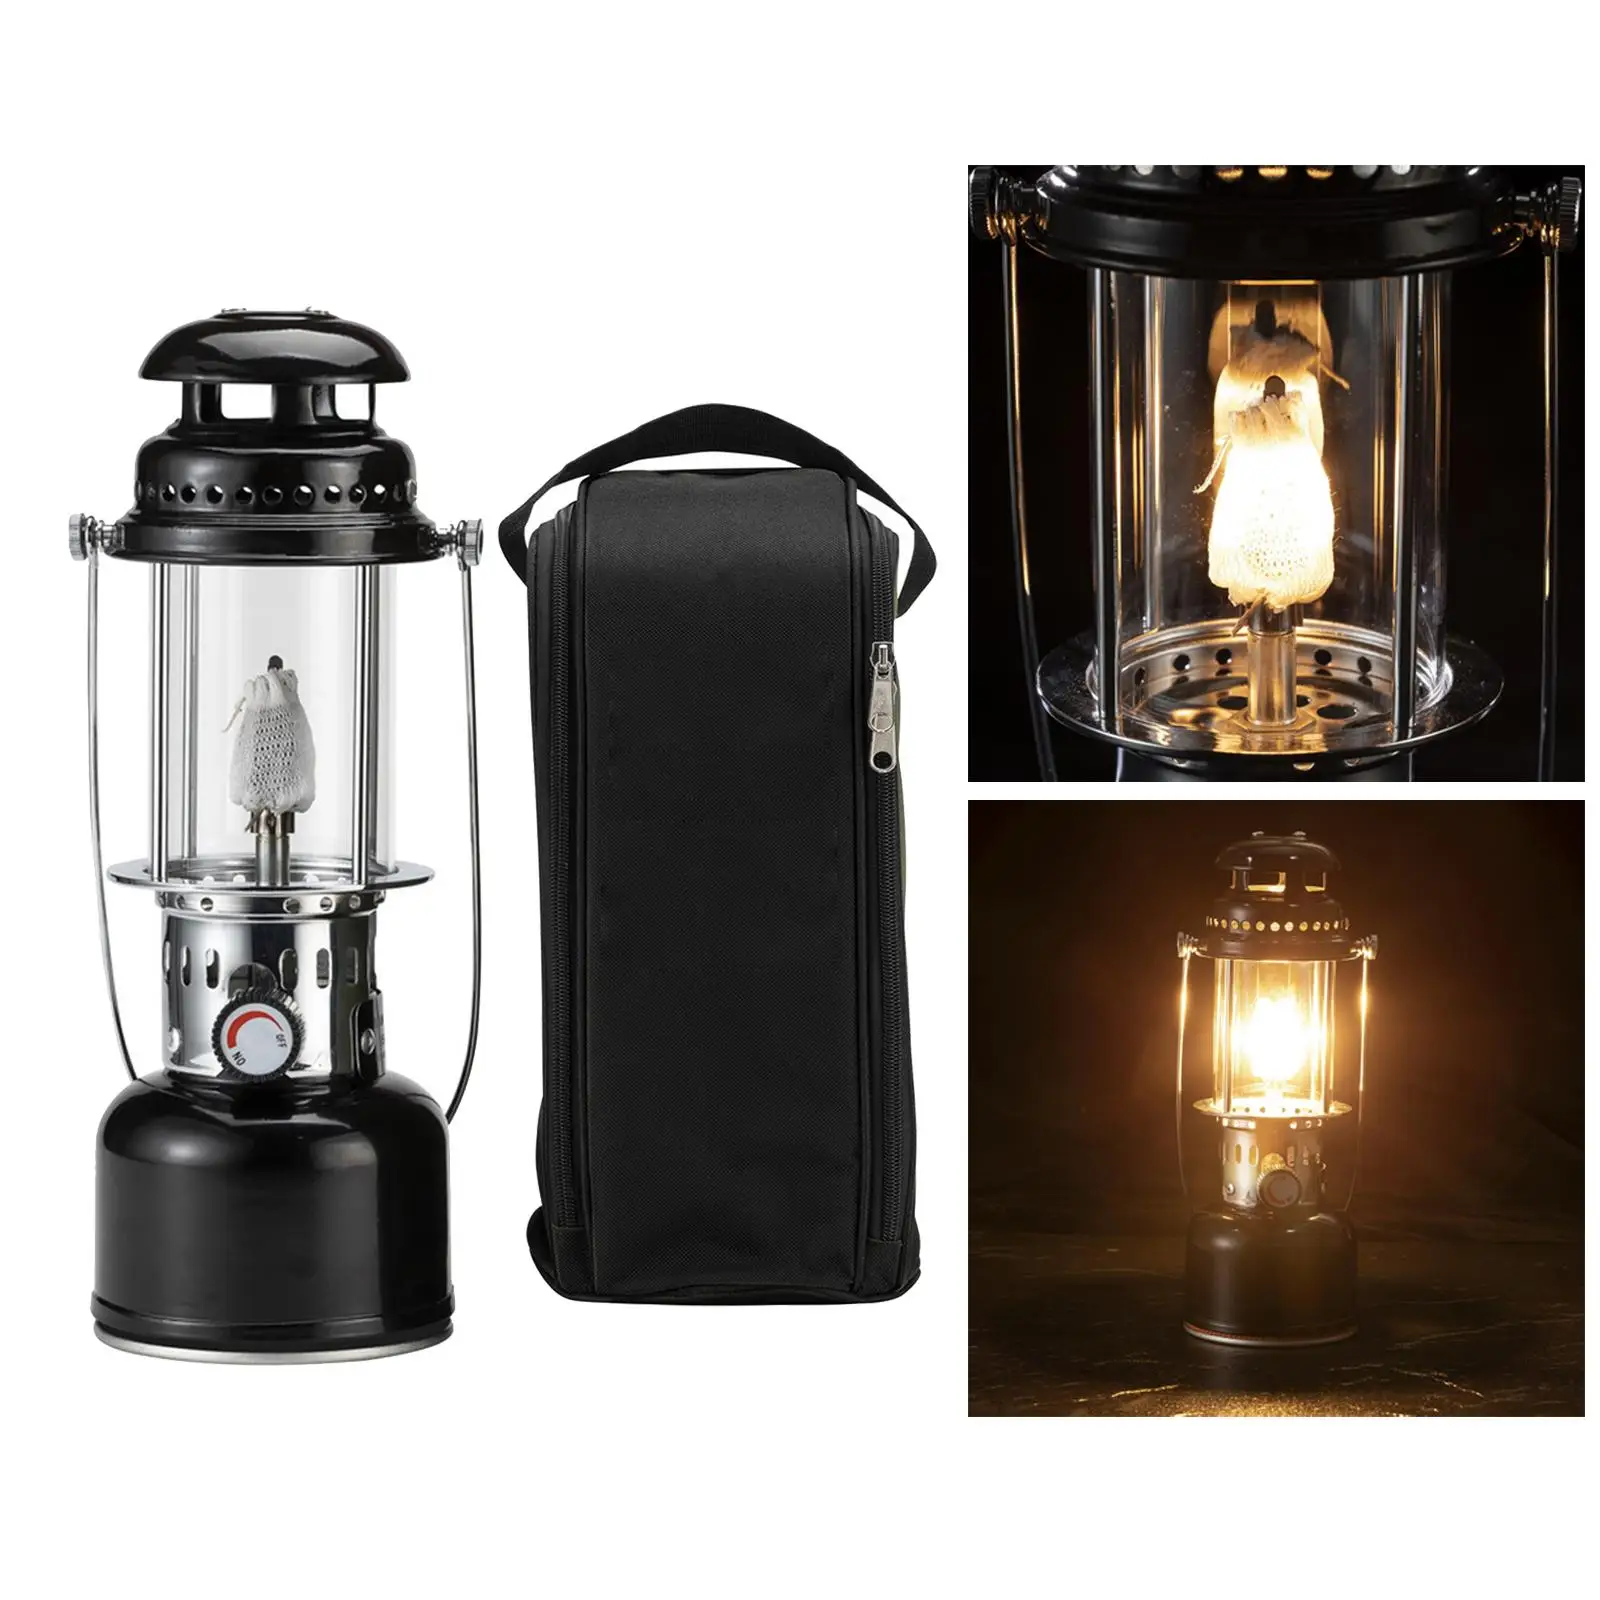 Outdoor Propane Gas Lantern Camping Hiking Light Kerosene Oil Lamp Lighting Table Decoration